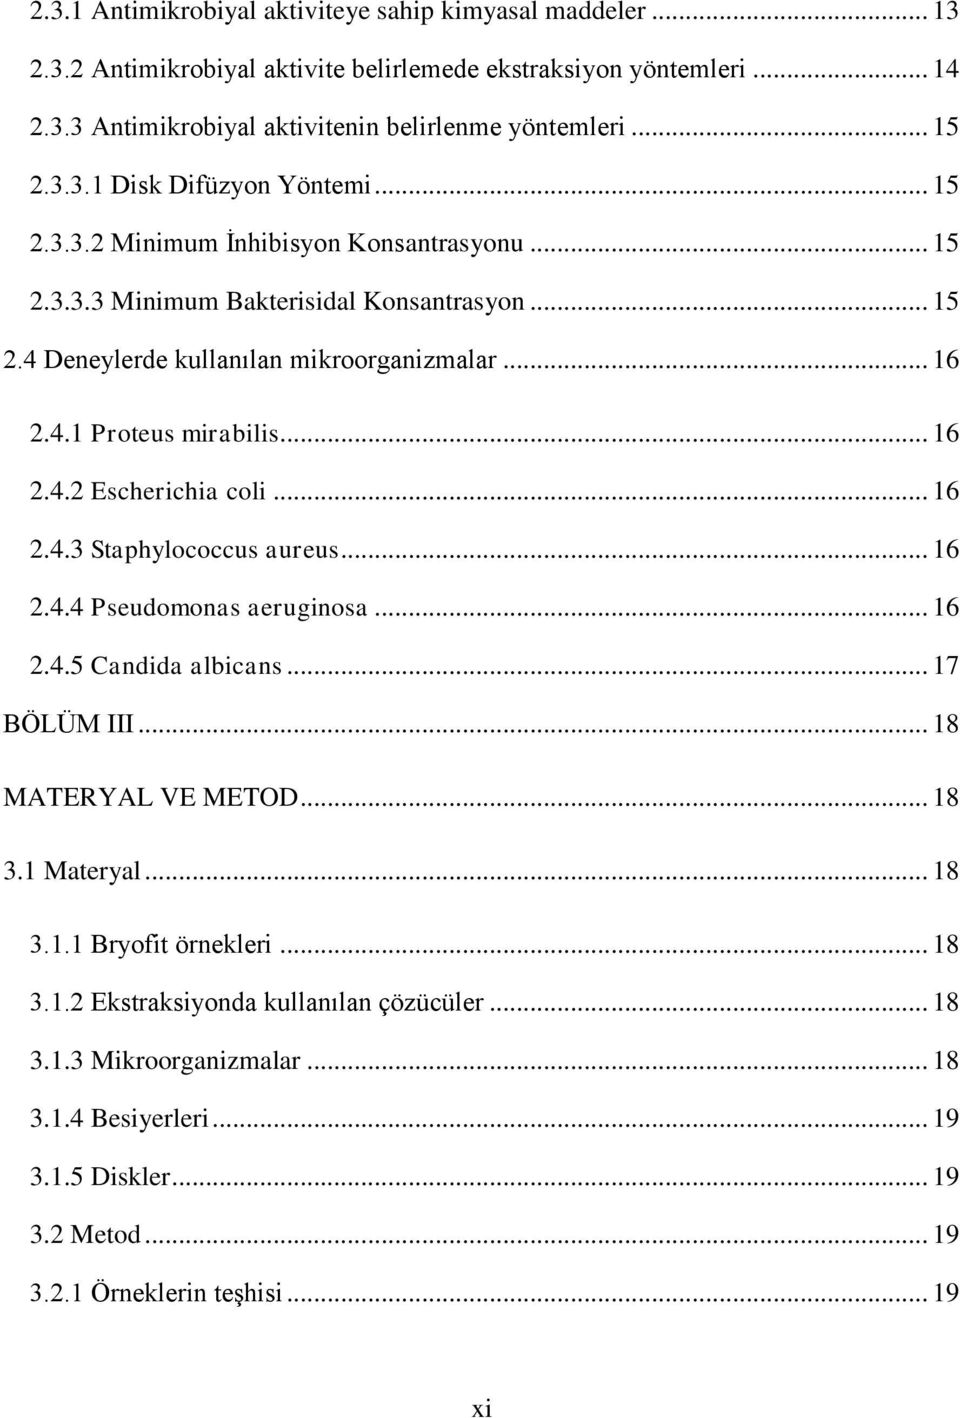 .. 16 2.4.3 Staphylococcus aureus... 16 2.4.4 Pseudomonas aeruginosa... 16 2.4.5 Candida albicans... 17 BÖLÜM III... 18 MATERYAL VE METOD... 18 3.1 Materyal... 18 3.1.1 Bryofit örnekleri... 18 3.1.2 Ekstraksiyonda kullanılan çözücüler.